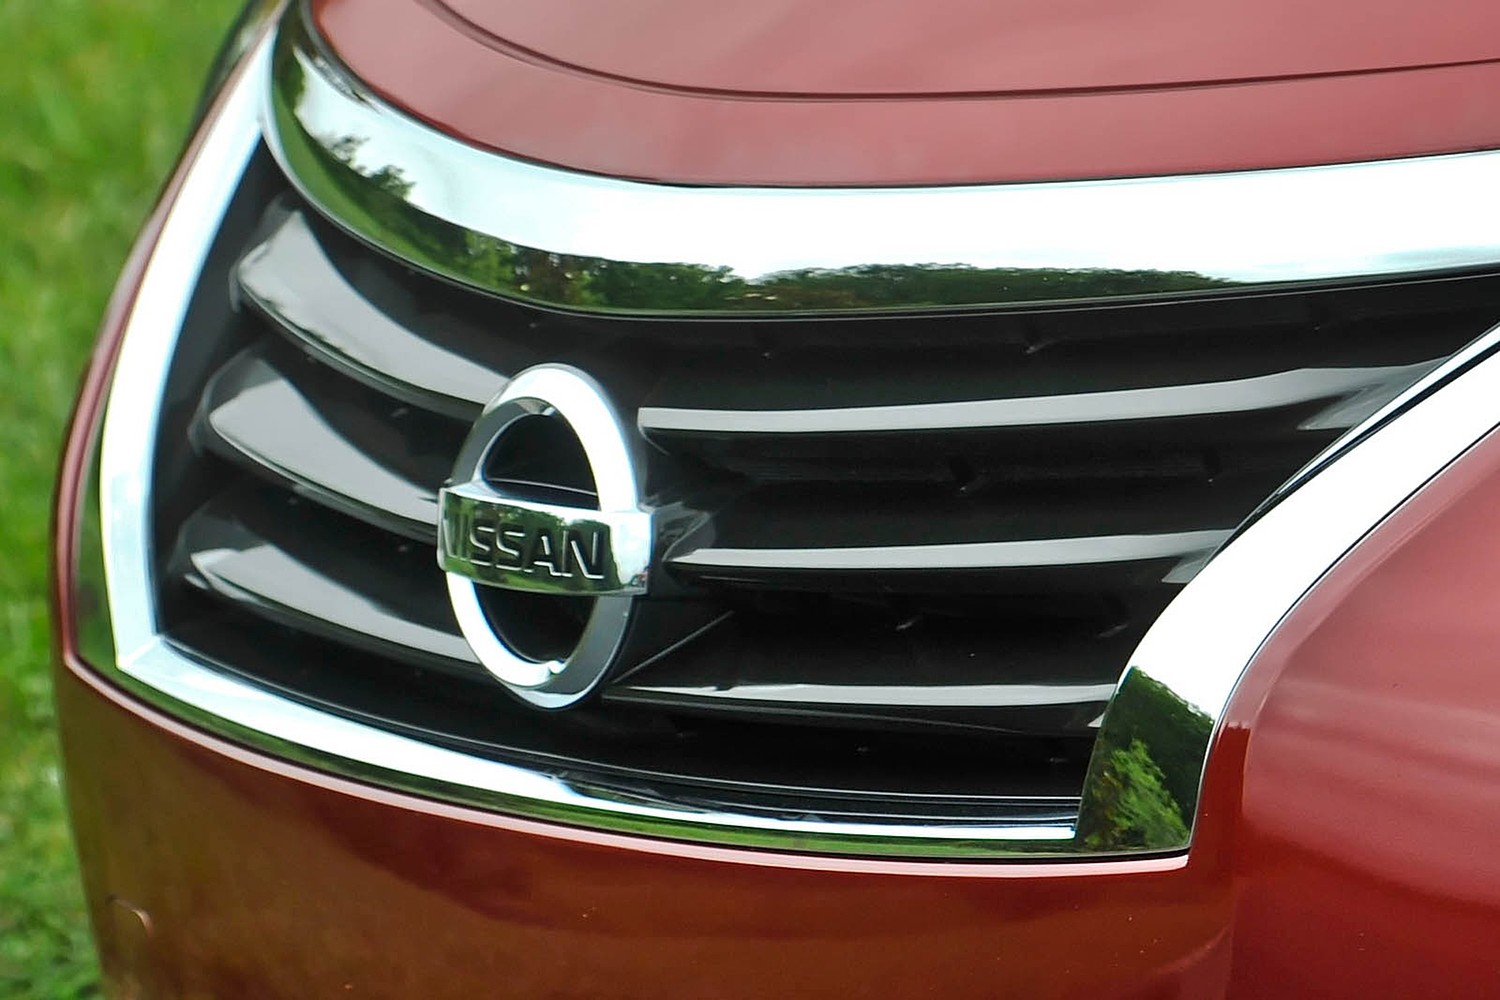 Nissan Altima 3.5 SL Sedan Front Badge (2013 model year shown)